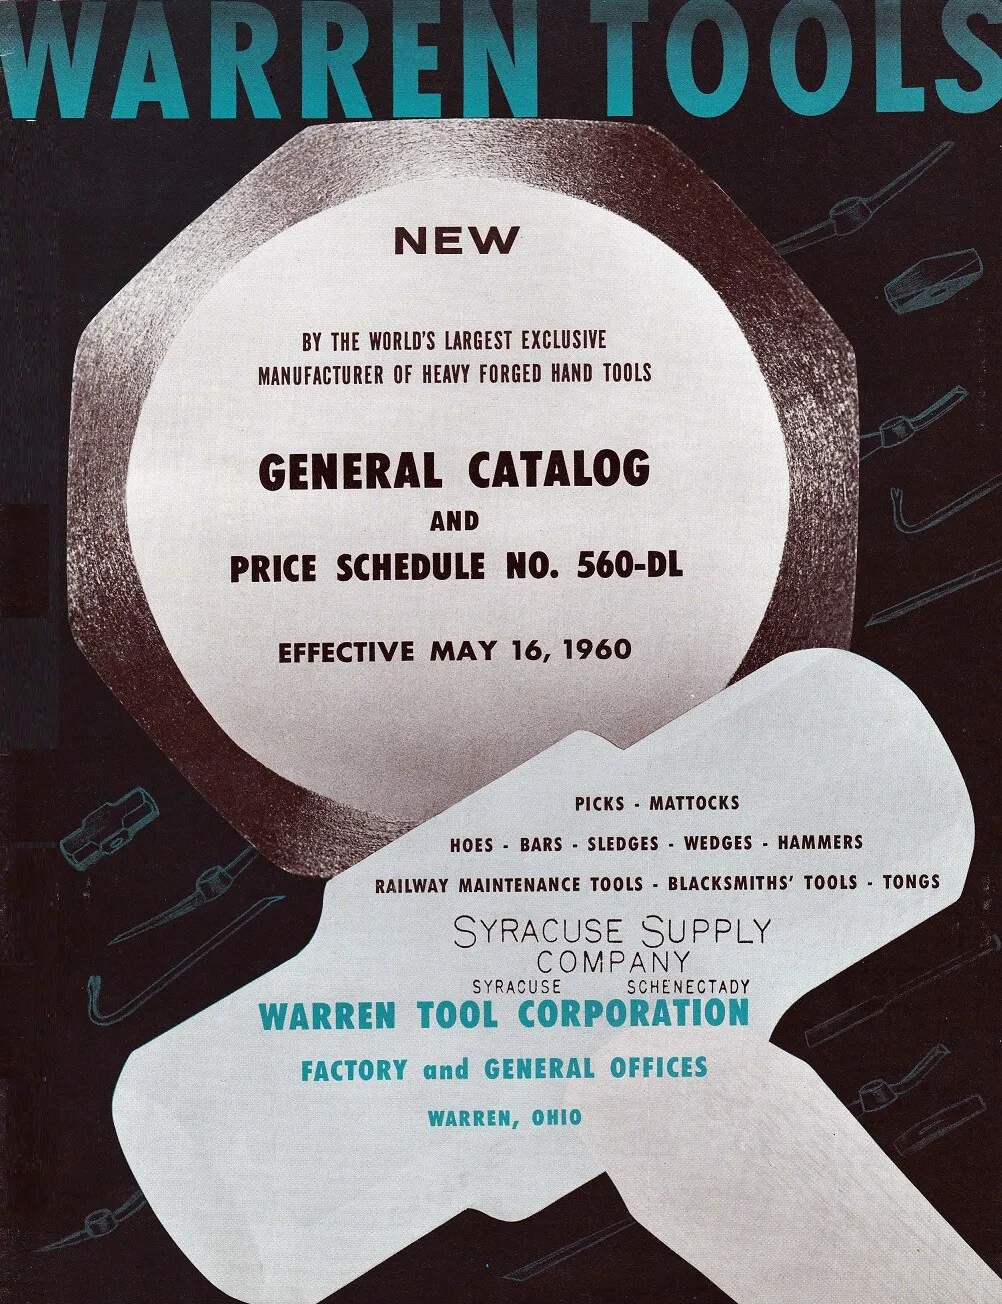 Tools General Catalog And Price Schedule Fits Warren No. 560-dl 1960